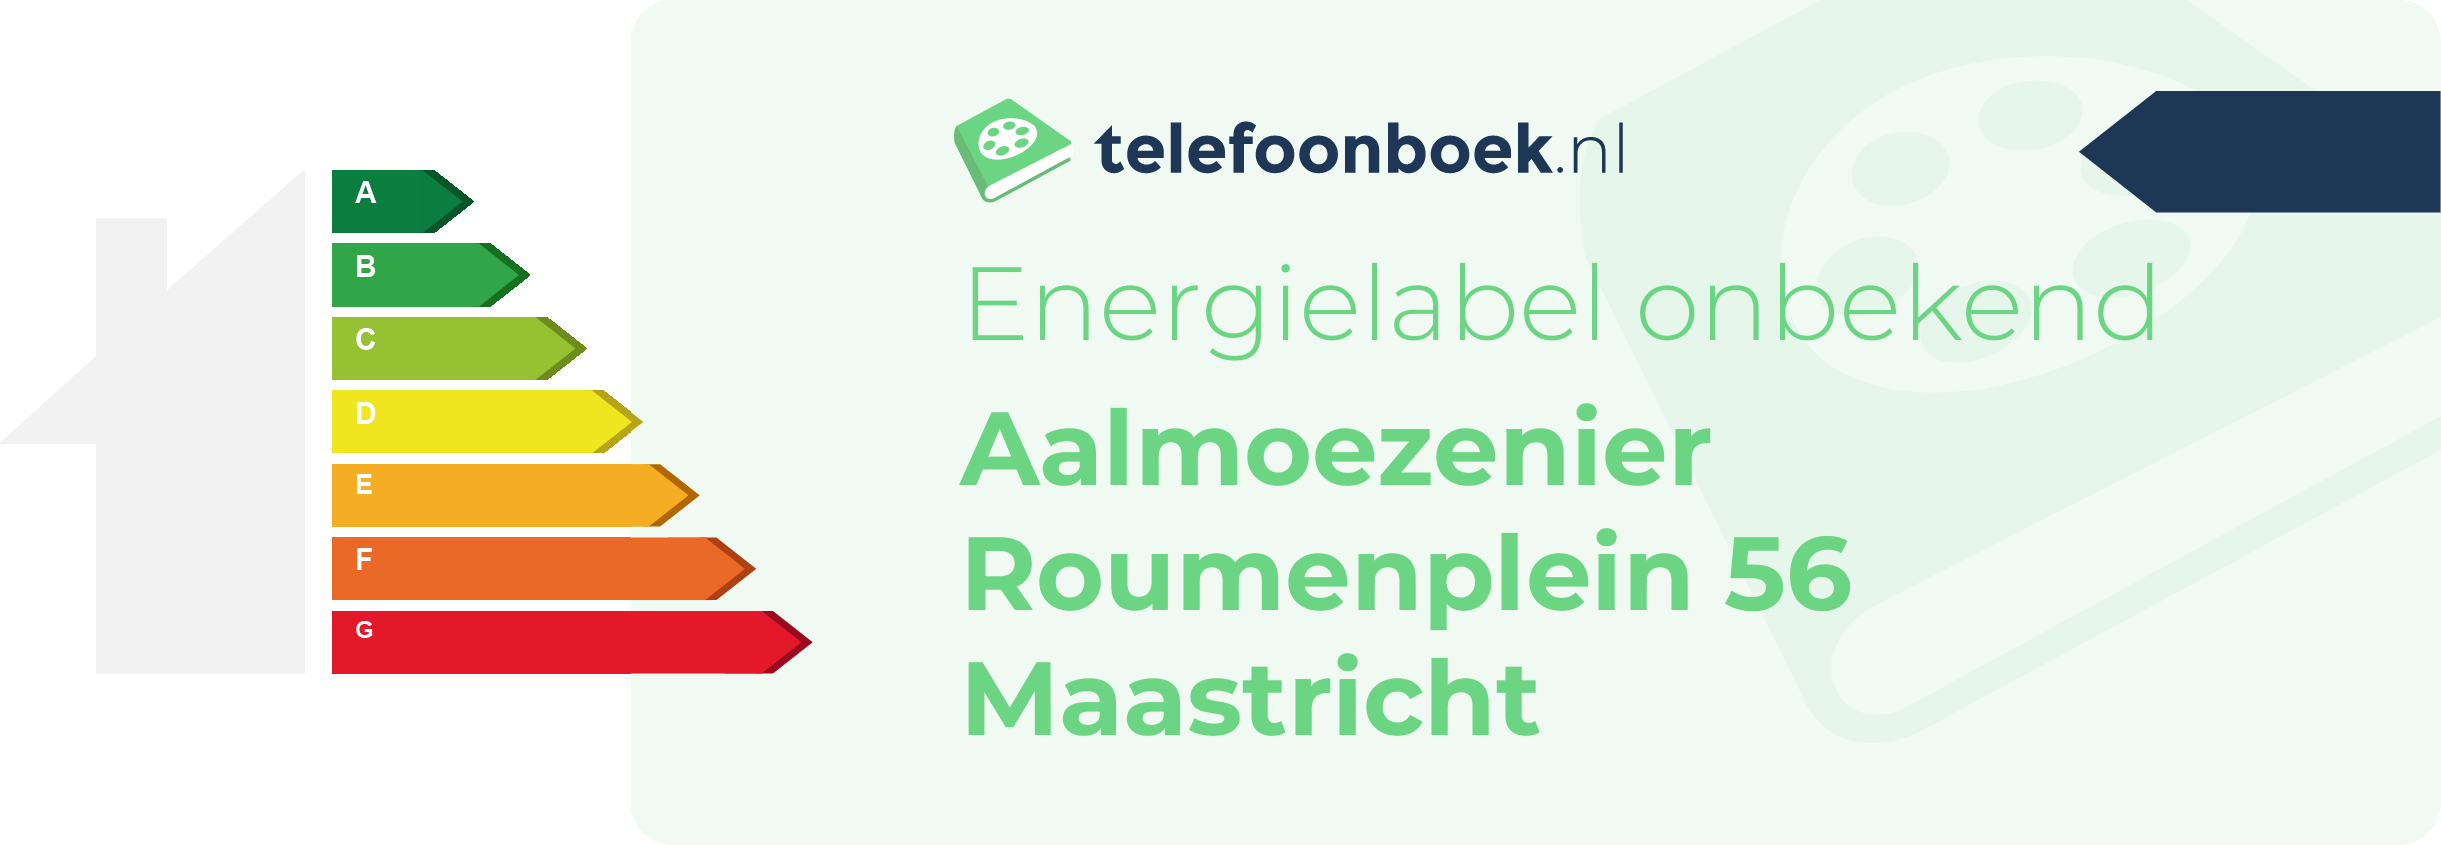 Energielabel Aalmoezenier Roumenplein 56 Maastricht